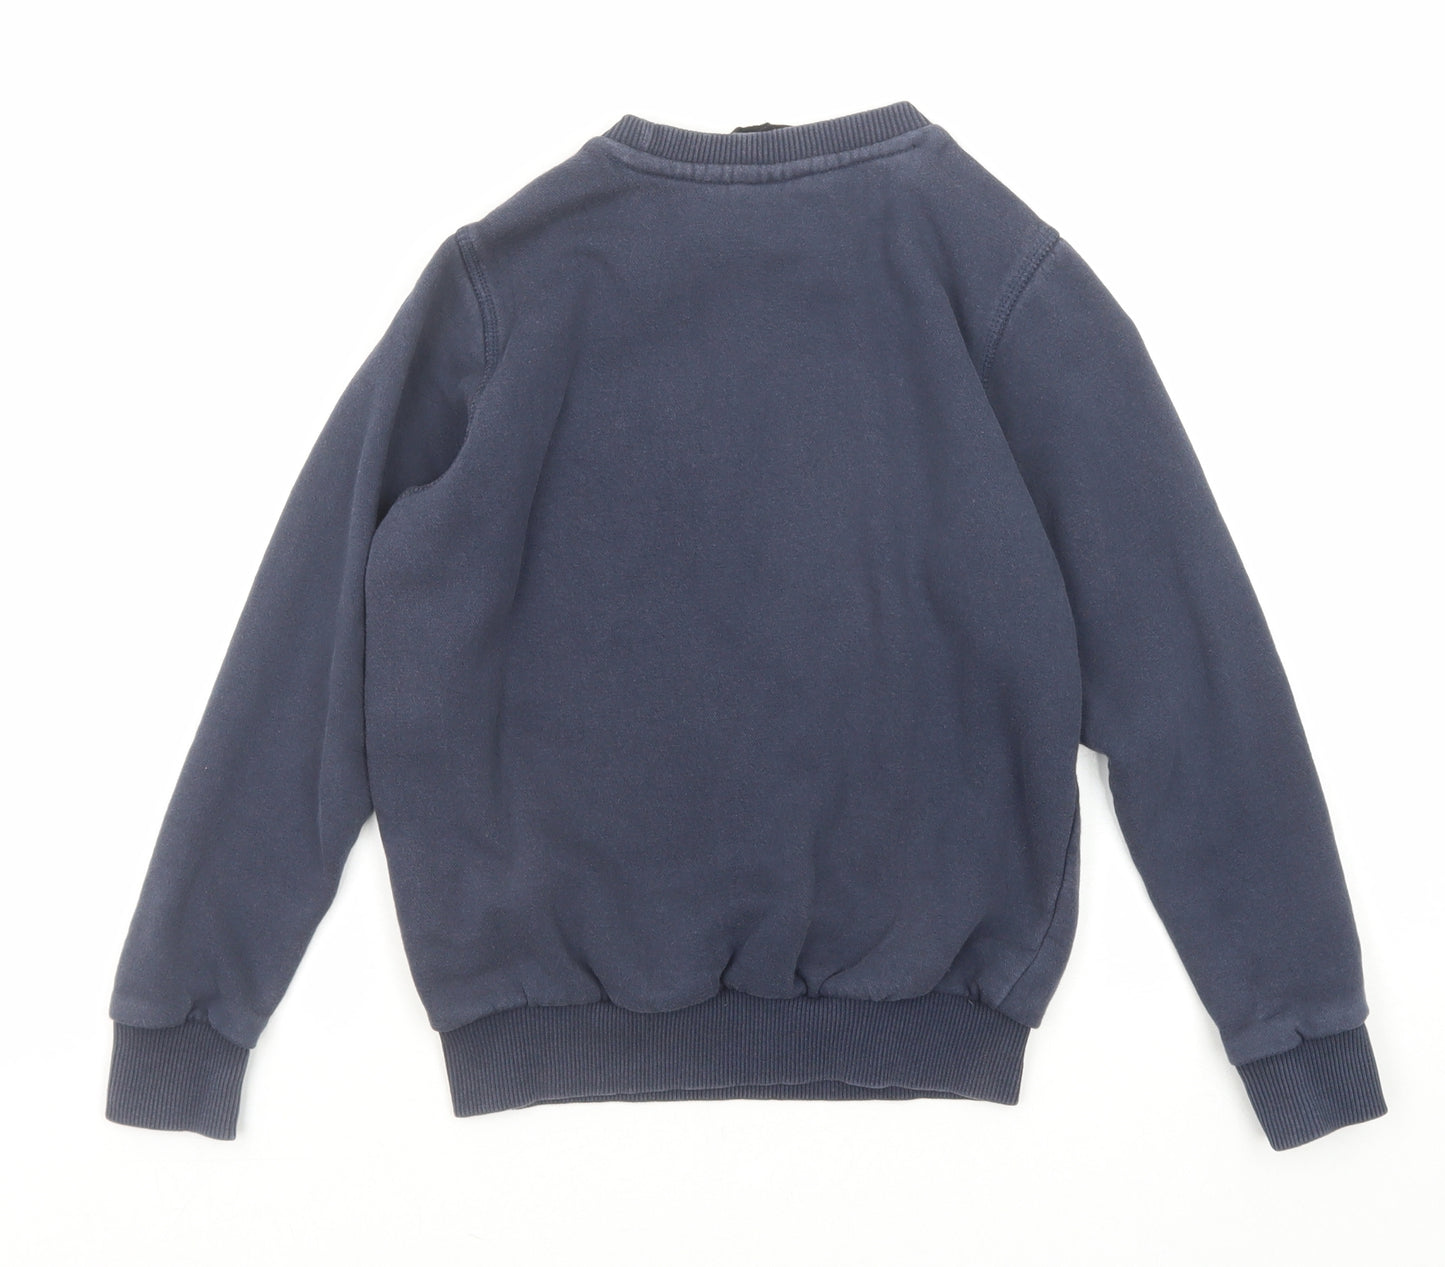 Umbro Boys Blue Cotton Pullover Sweatshirt Size 7-8 Years Pullover